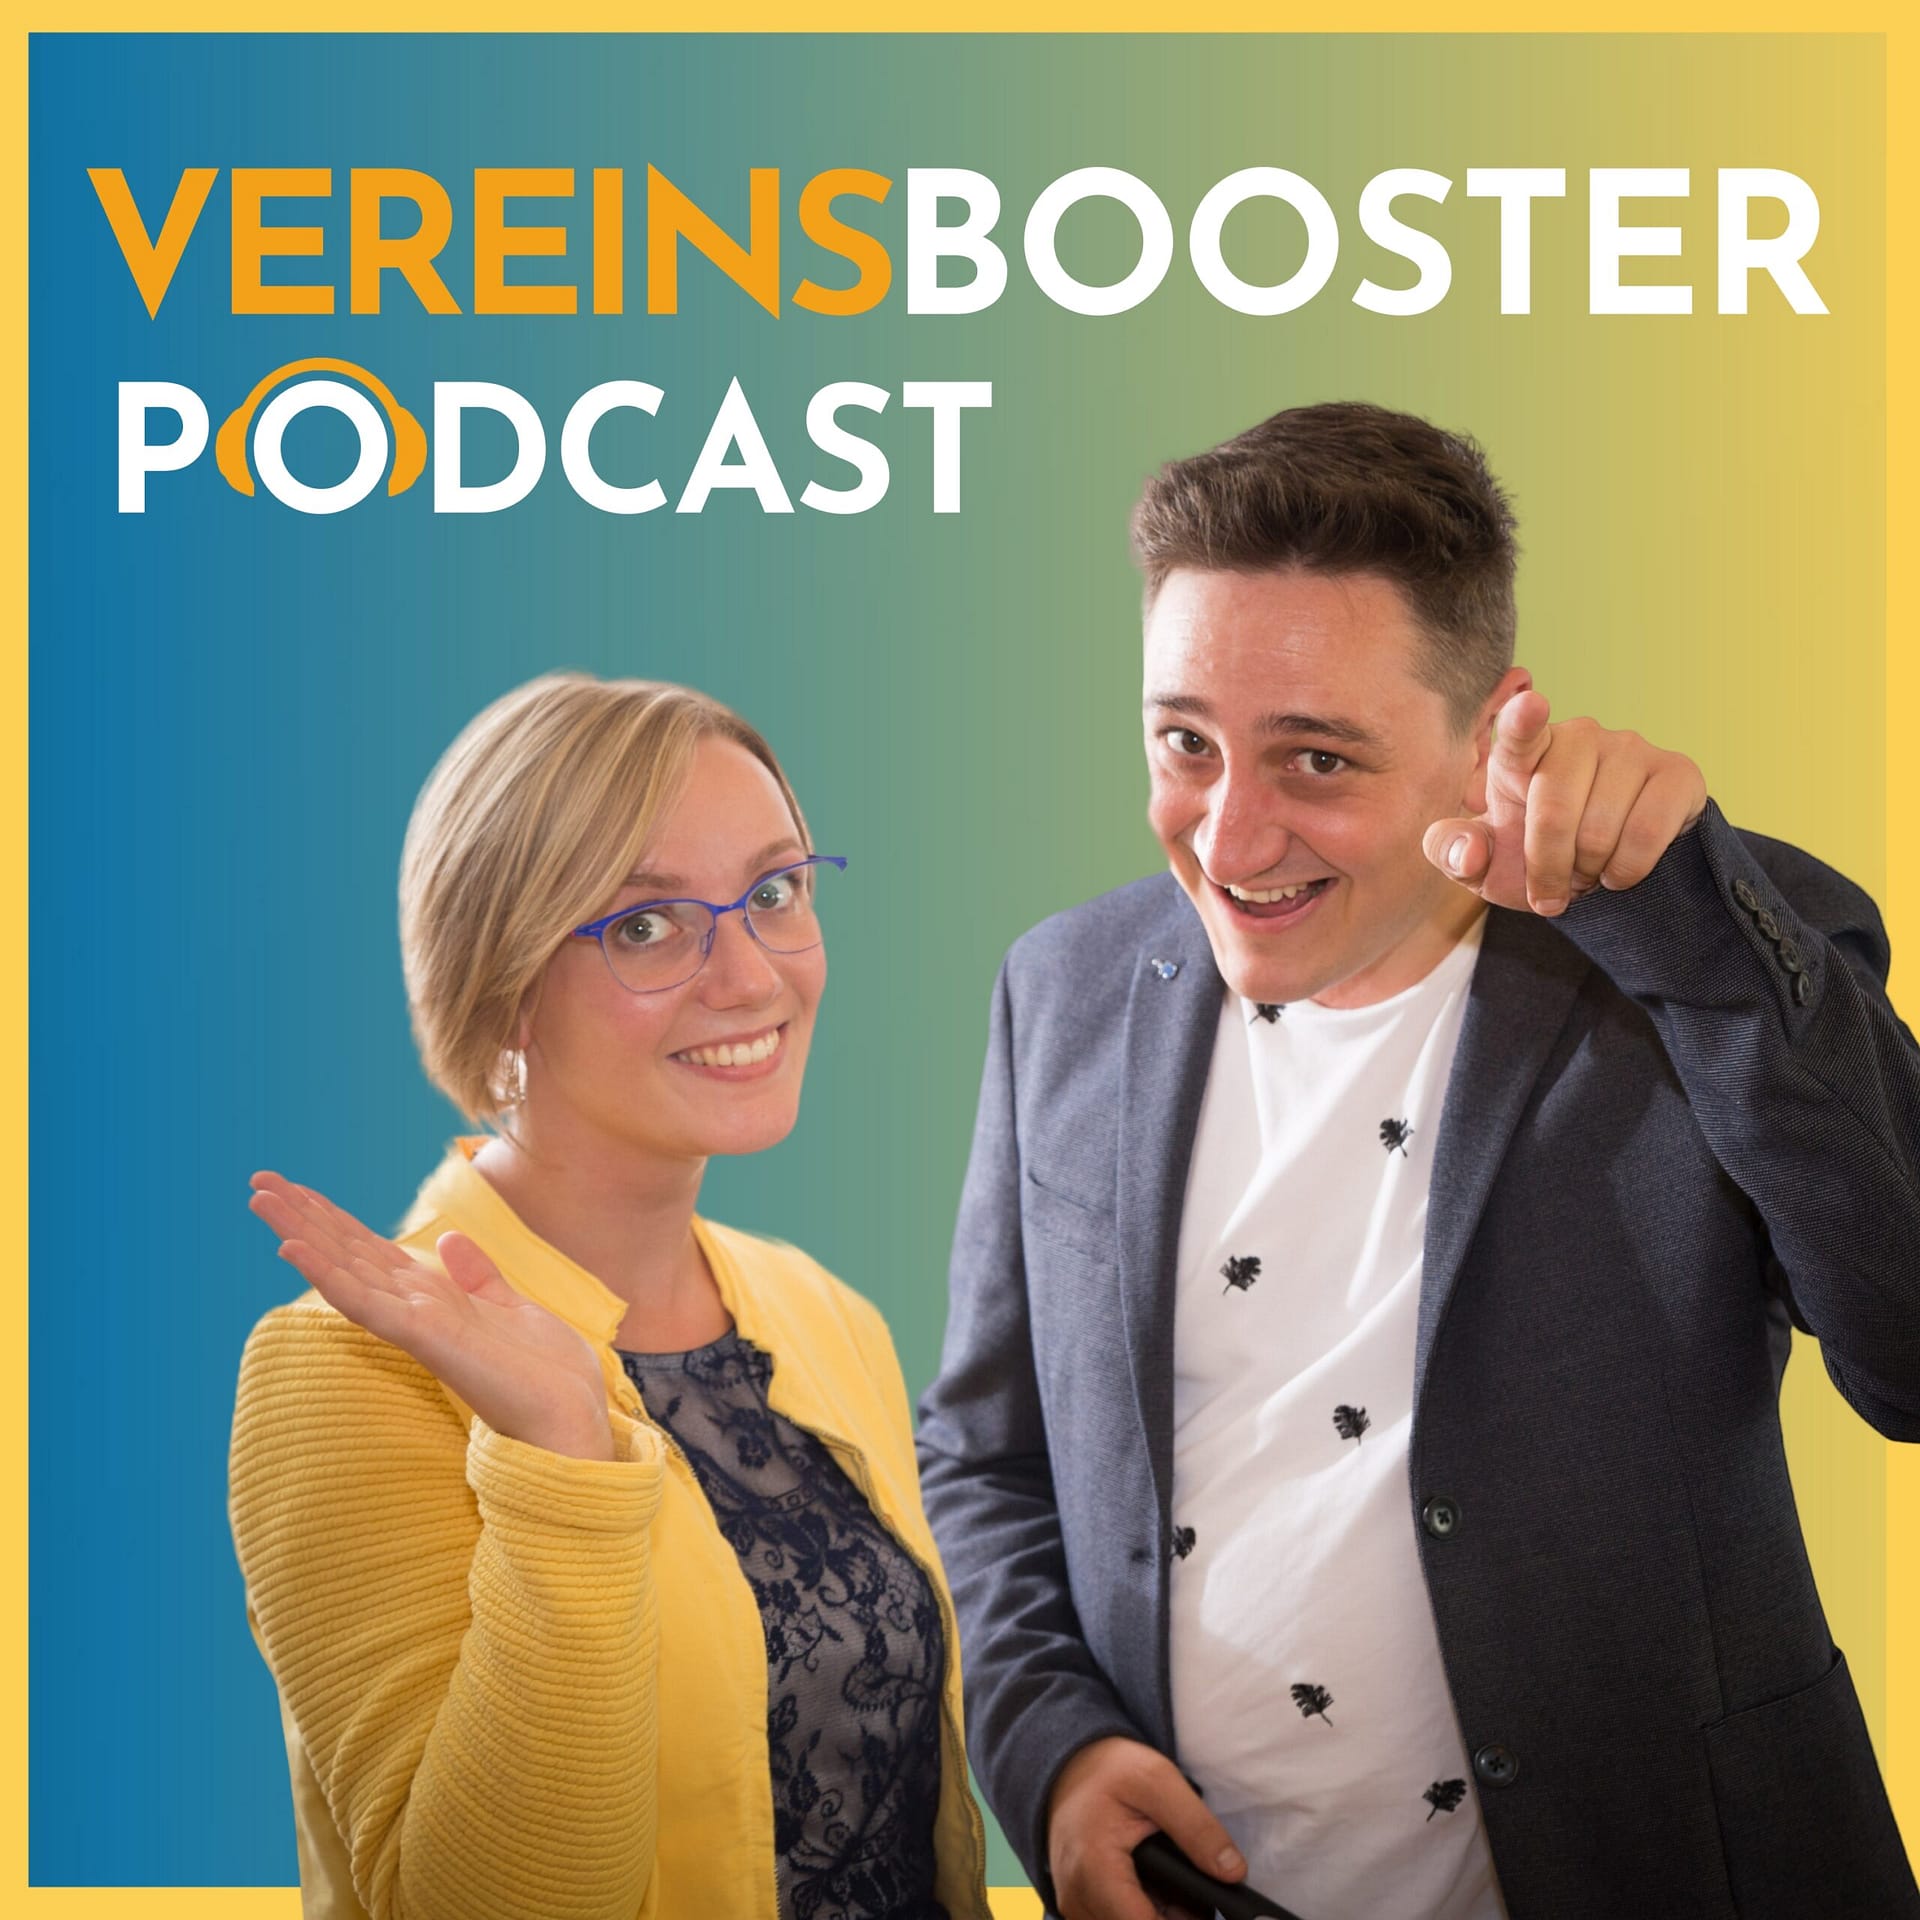 Couchgespräch zum 1-jährigen Vereinspodcast Jubiläum podcast vereinsbooster cover 2023 highresolution scaled